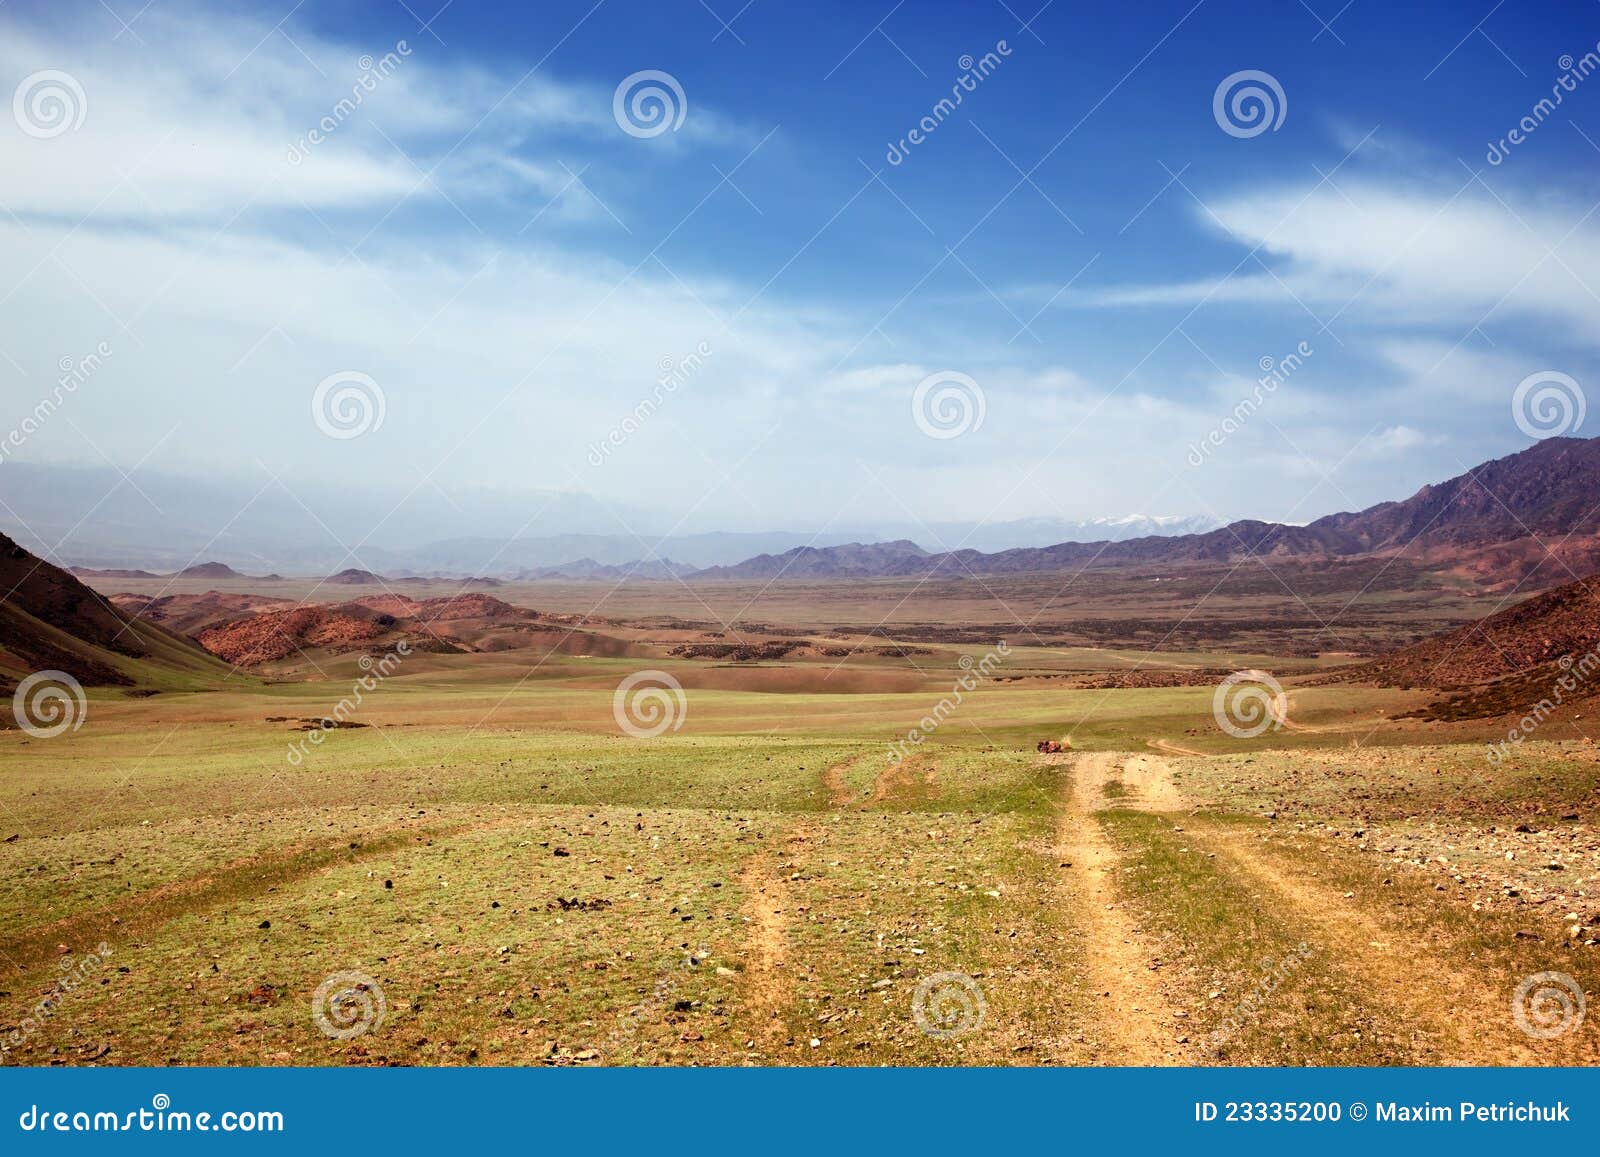 spring steppe in kazakhstan